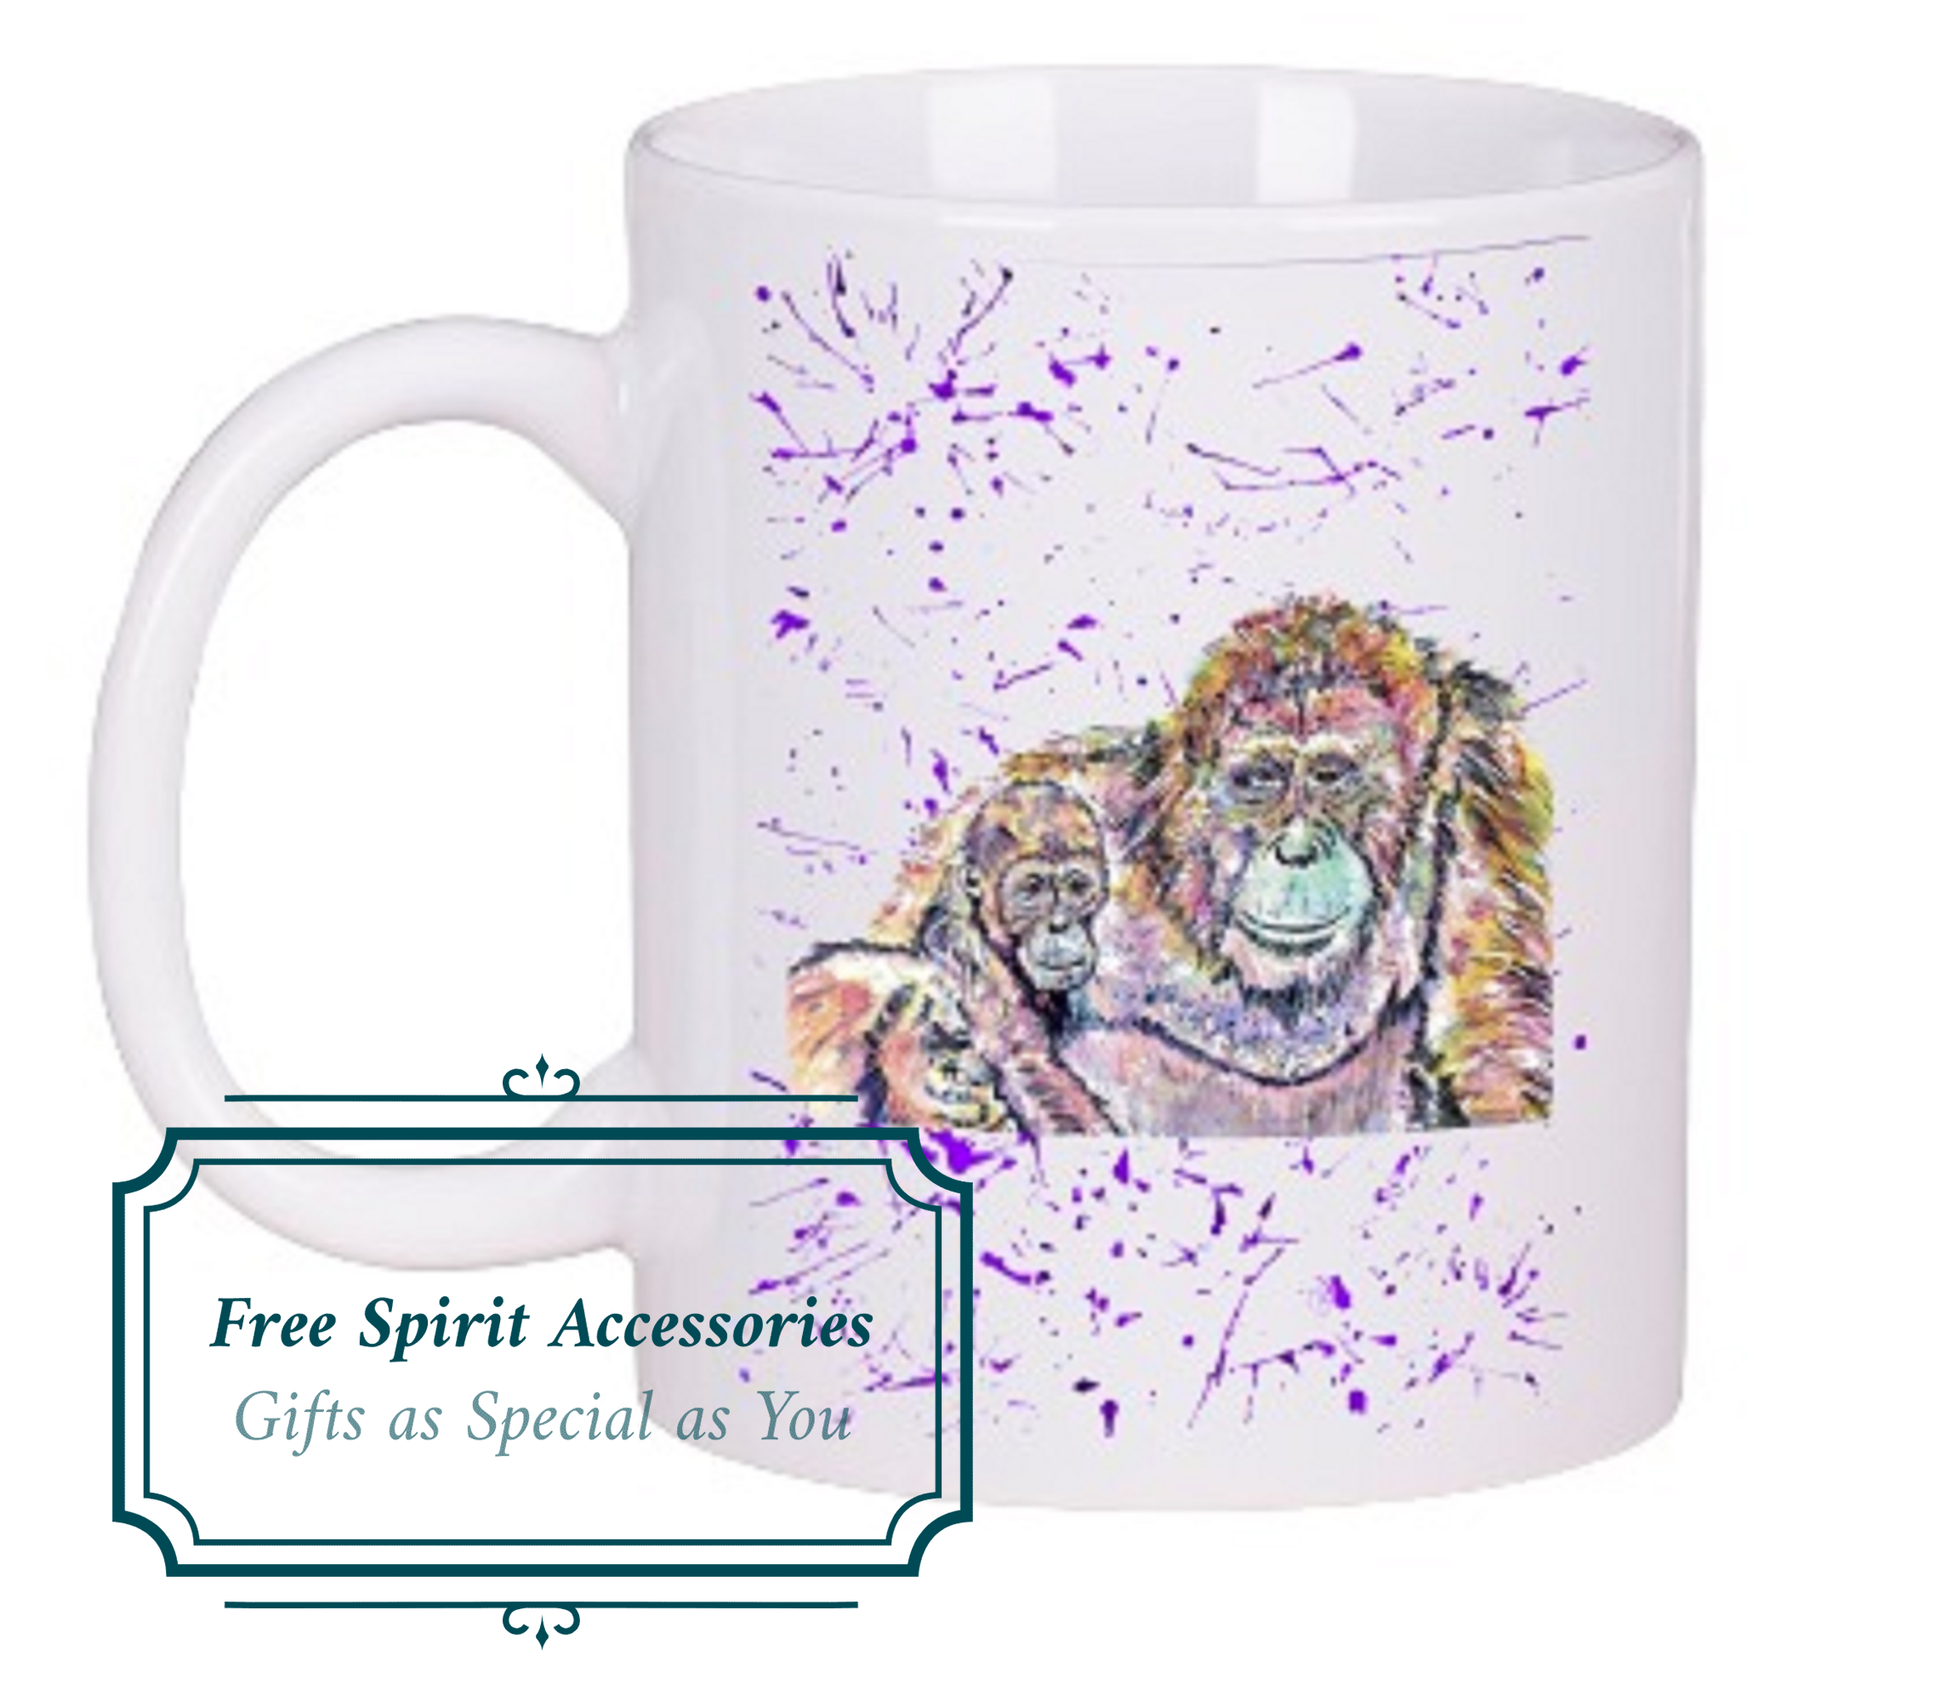  Mum and Baby Orangutan Coffee Mug by Free Spirit Accessories sold by Free Spirit Accessories